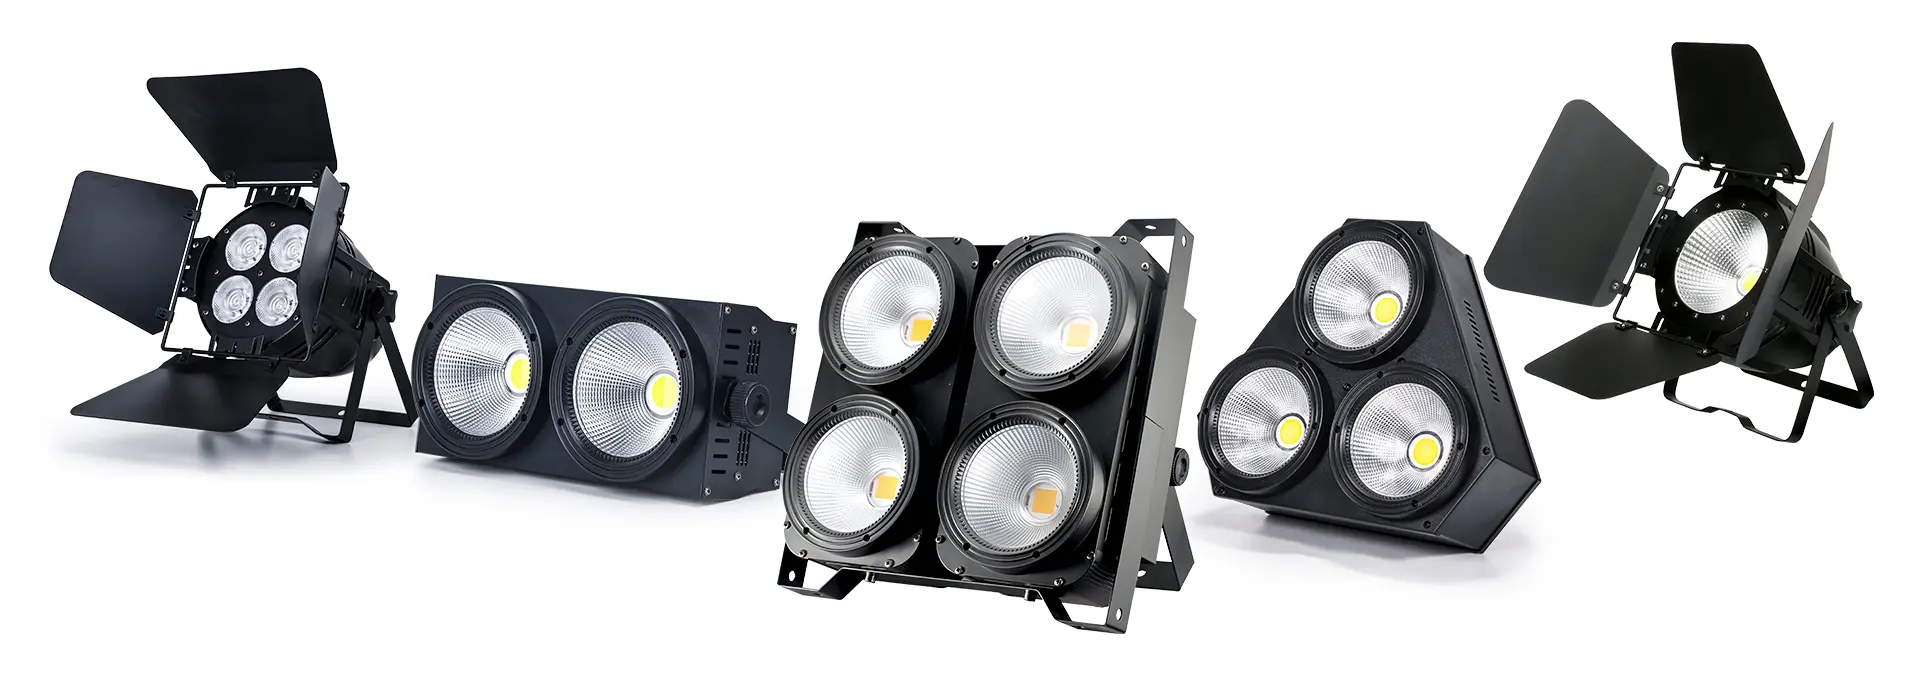 Comprehensive Product Set LED COB Lights for Professional Use